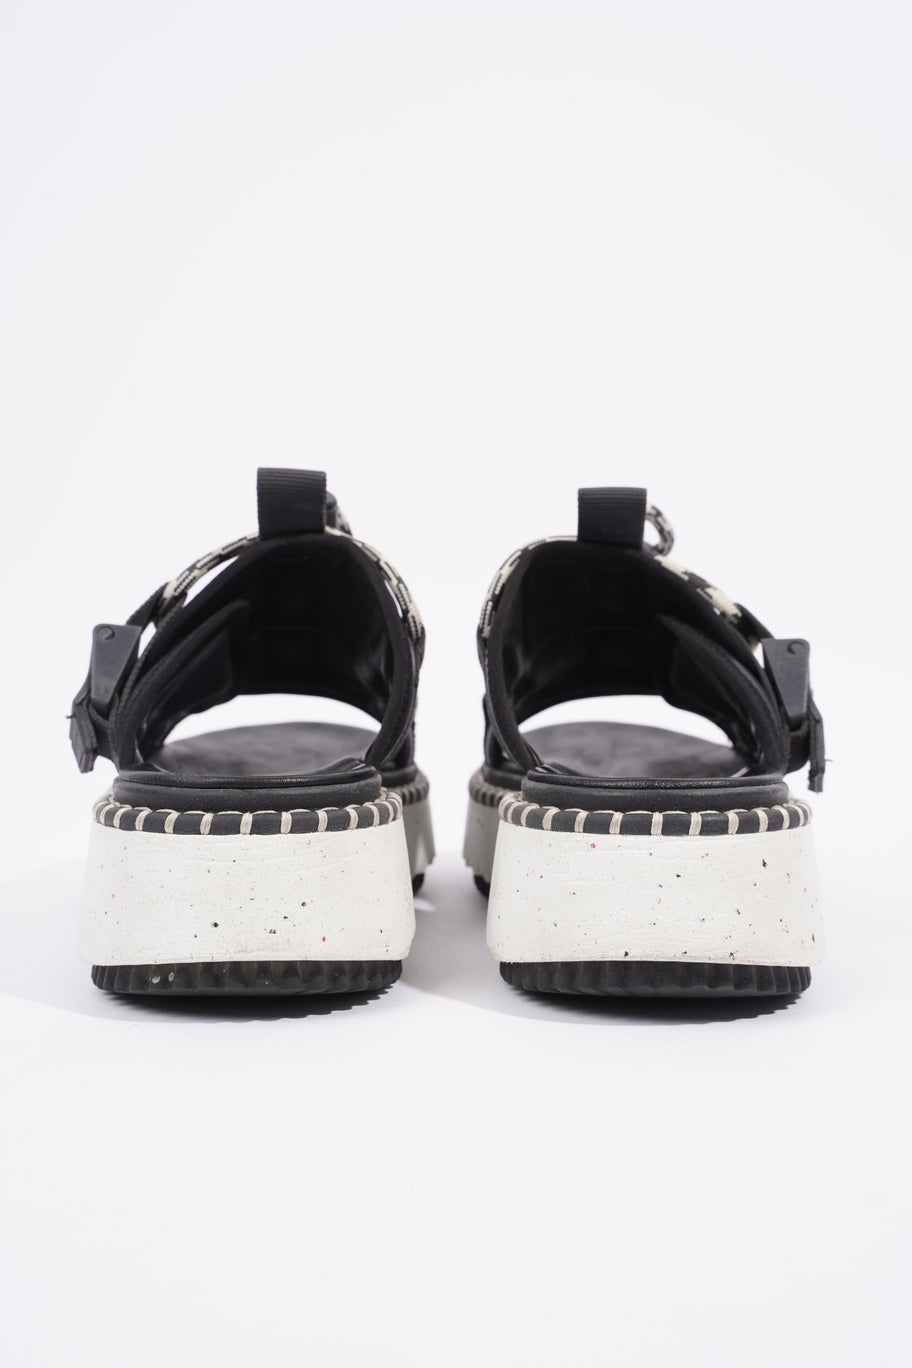 Lilli Platform Sandals Black / White Leather EU 37 UK 4 Image 6